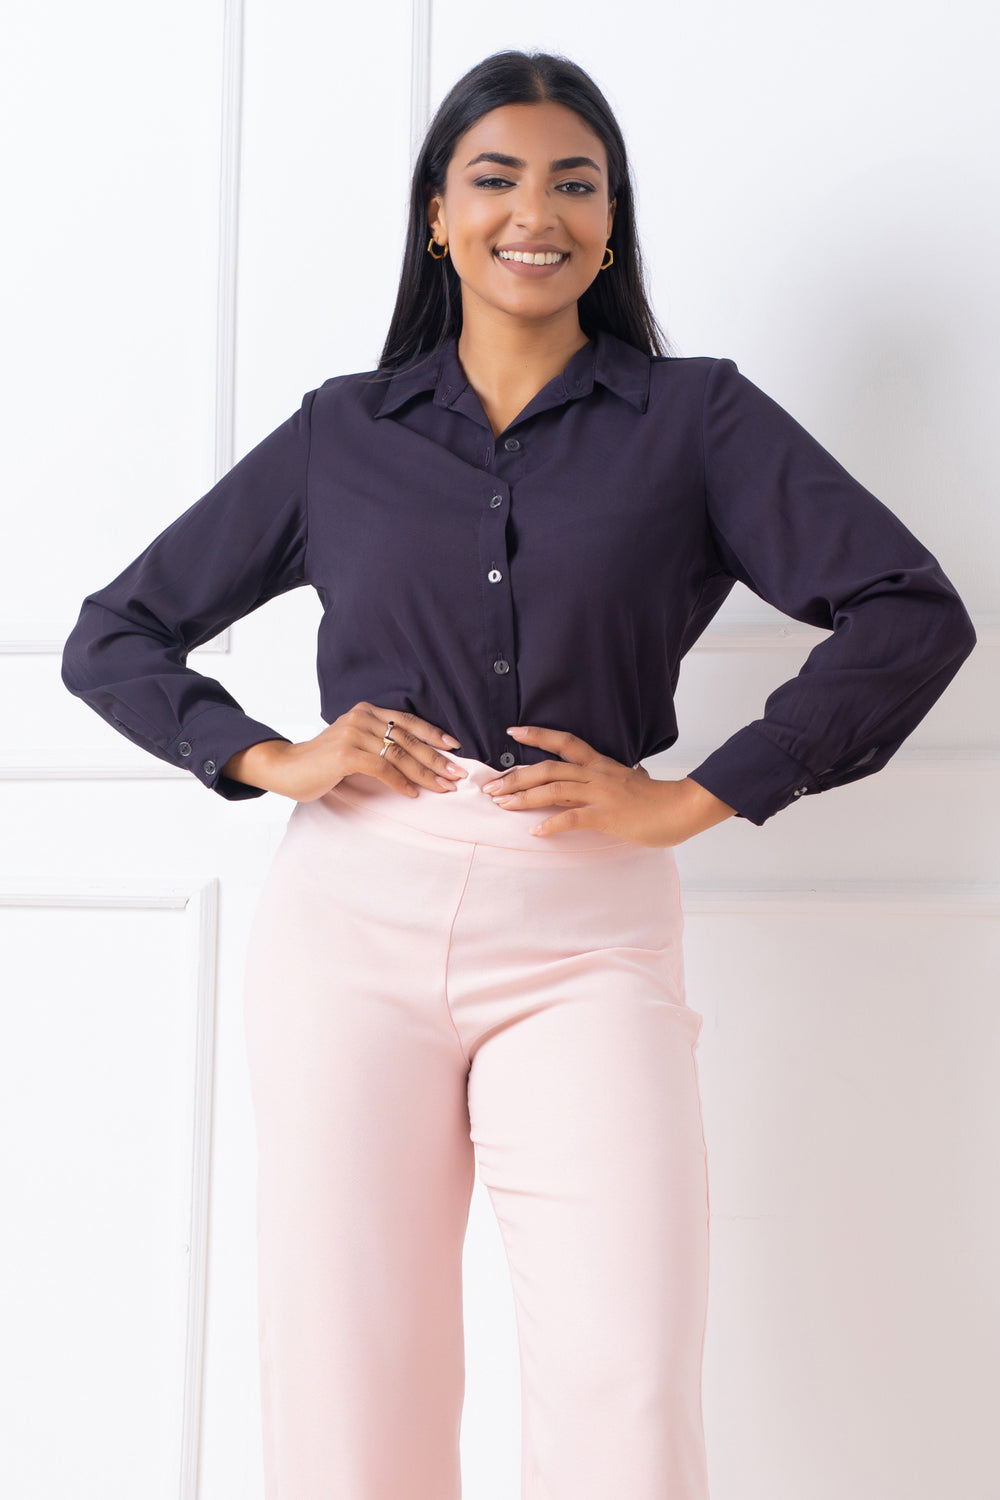 Black Button Down Shirt - Regular Fit, Top, Long Sleeves, New Arrivals, Office Tops, Regular Fit, Shirt, Shirt Collar, Smart Casual, Smart Casual Top, Work Top, workwear - MONDY, Sri Lankan w